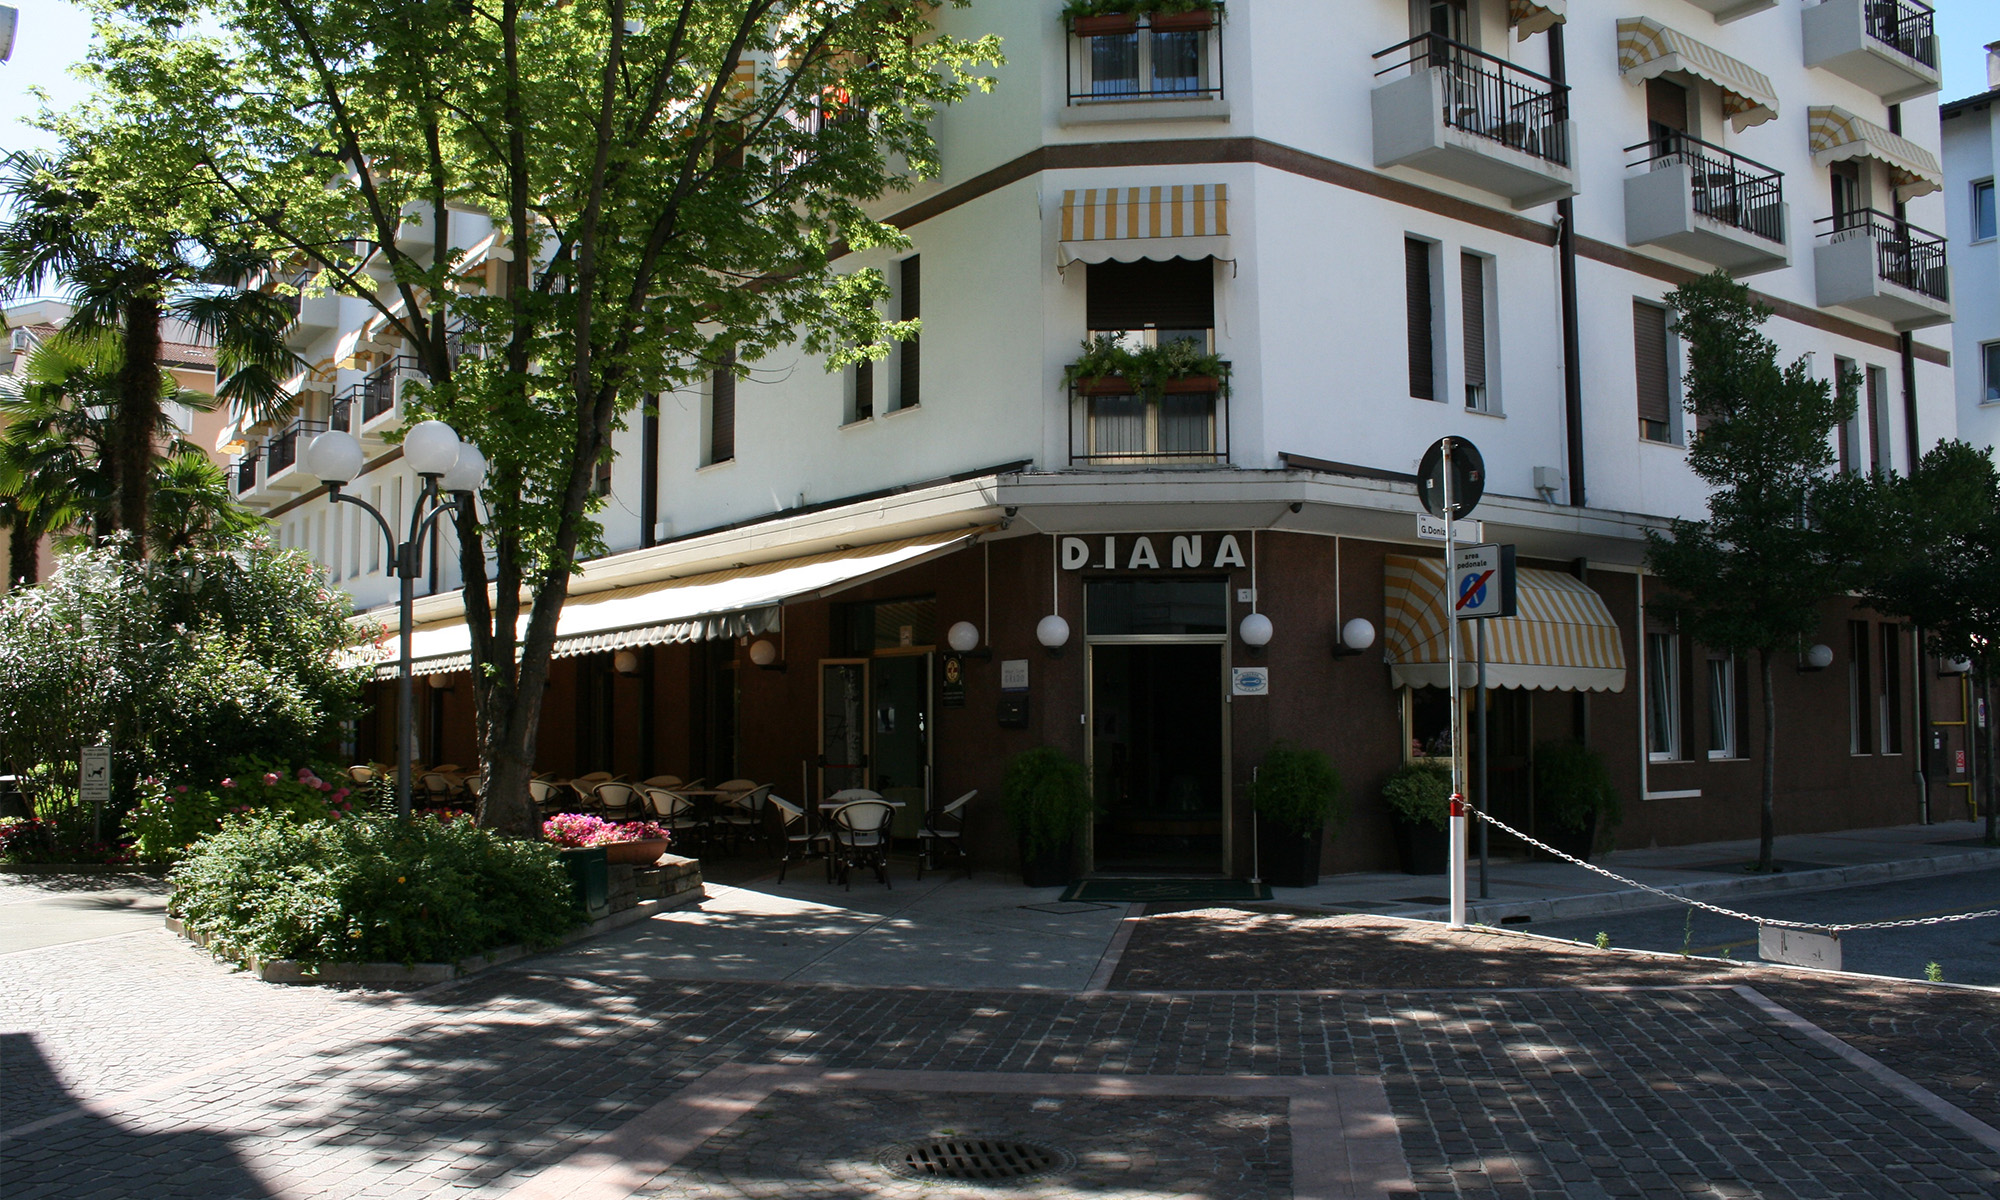 Foto Hotel Diana entrata 